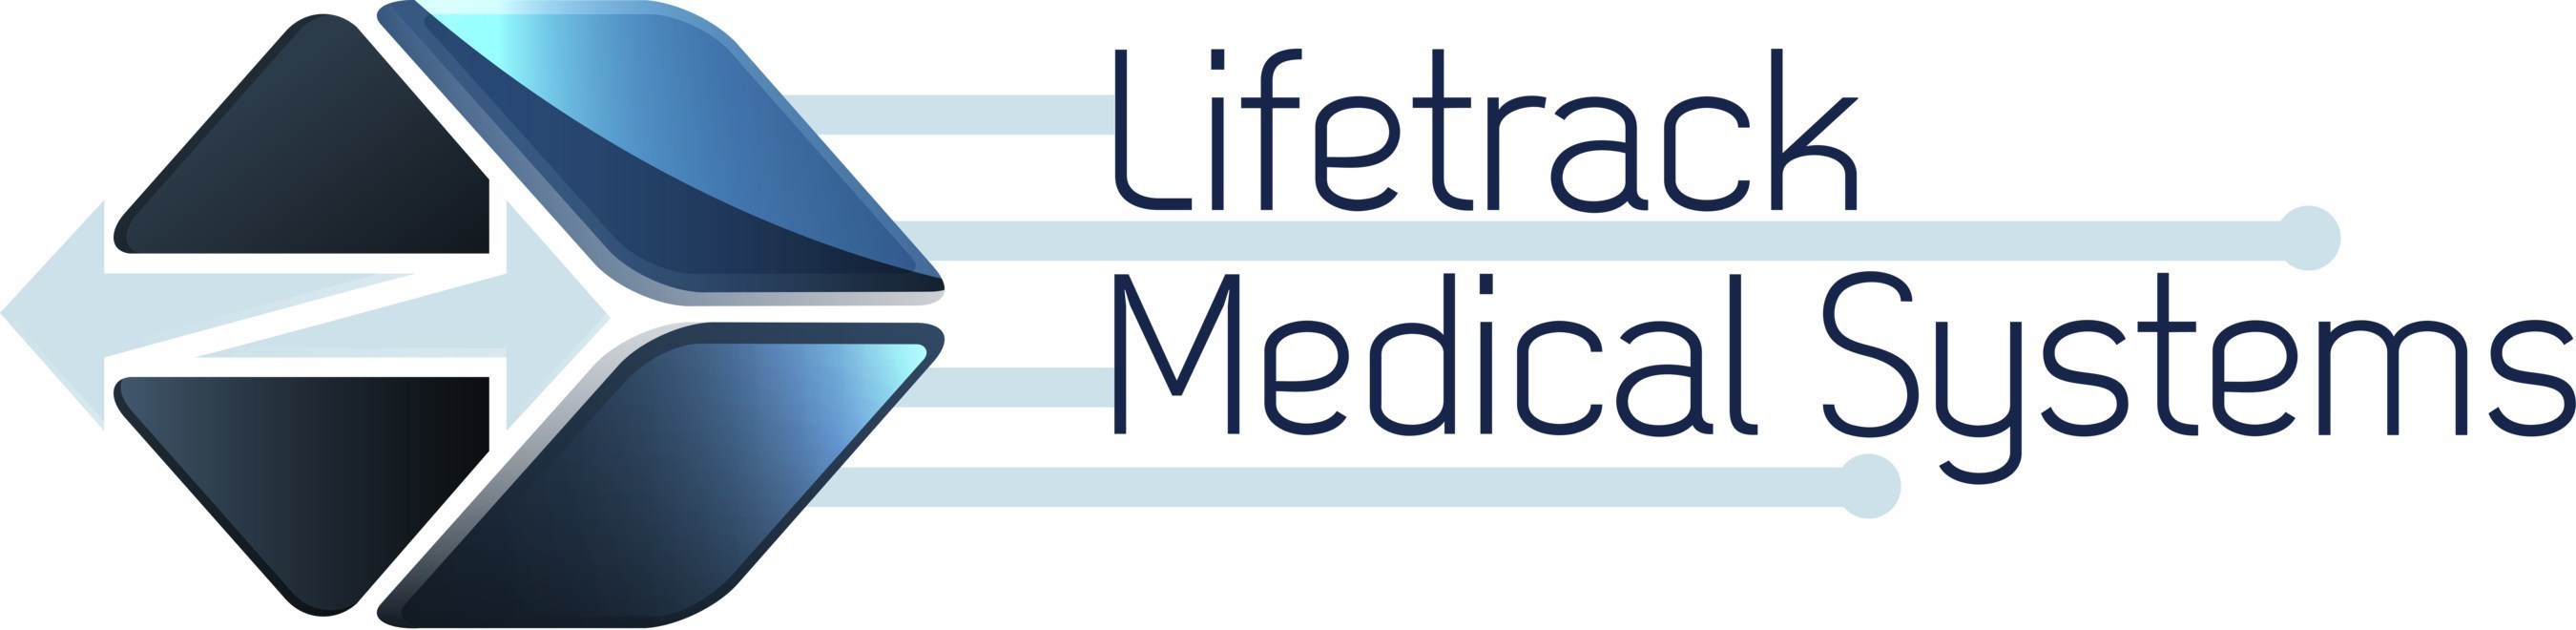 Lifetrack Medical Systems Logo